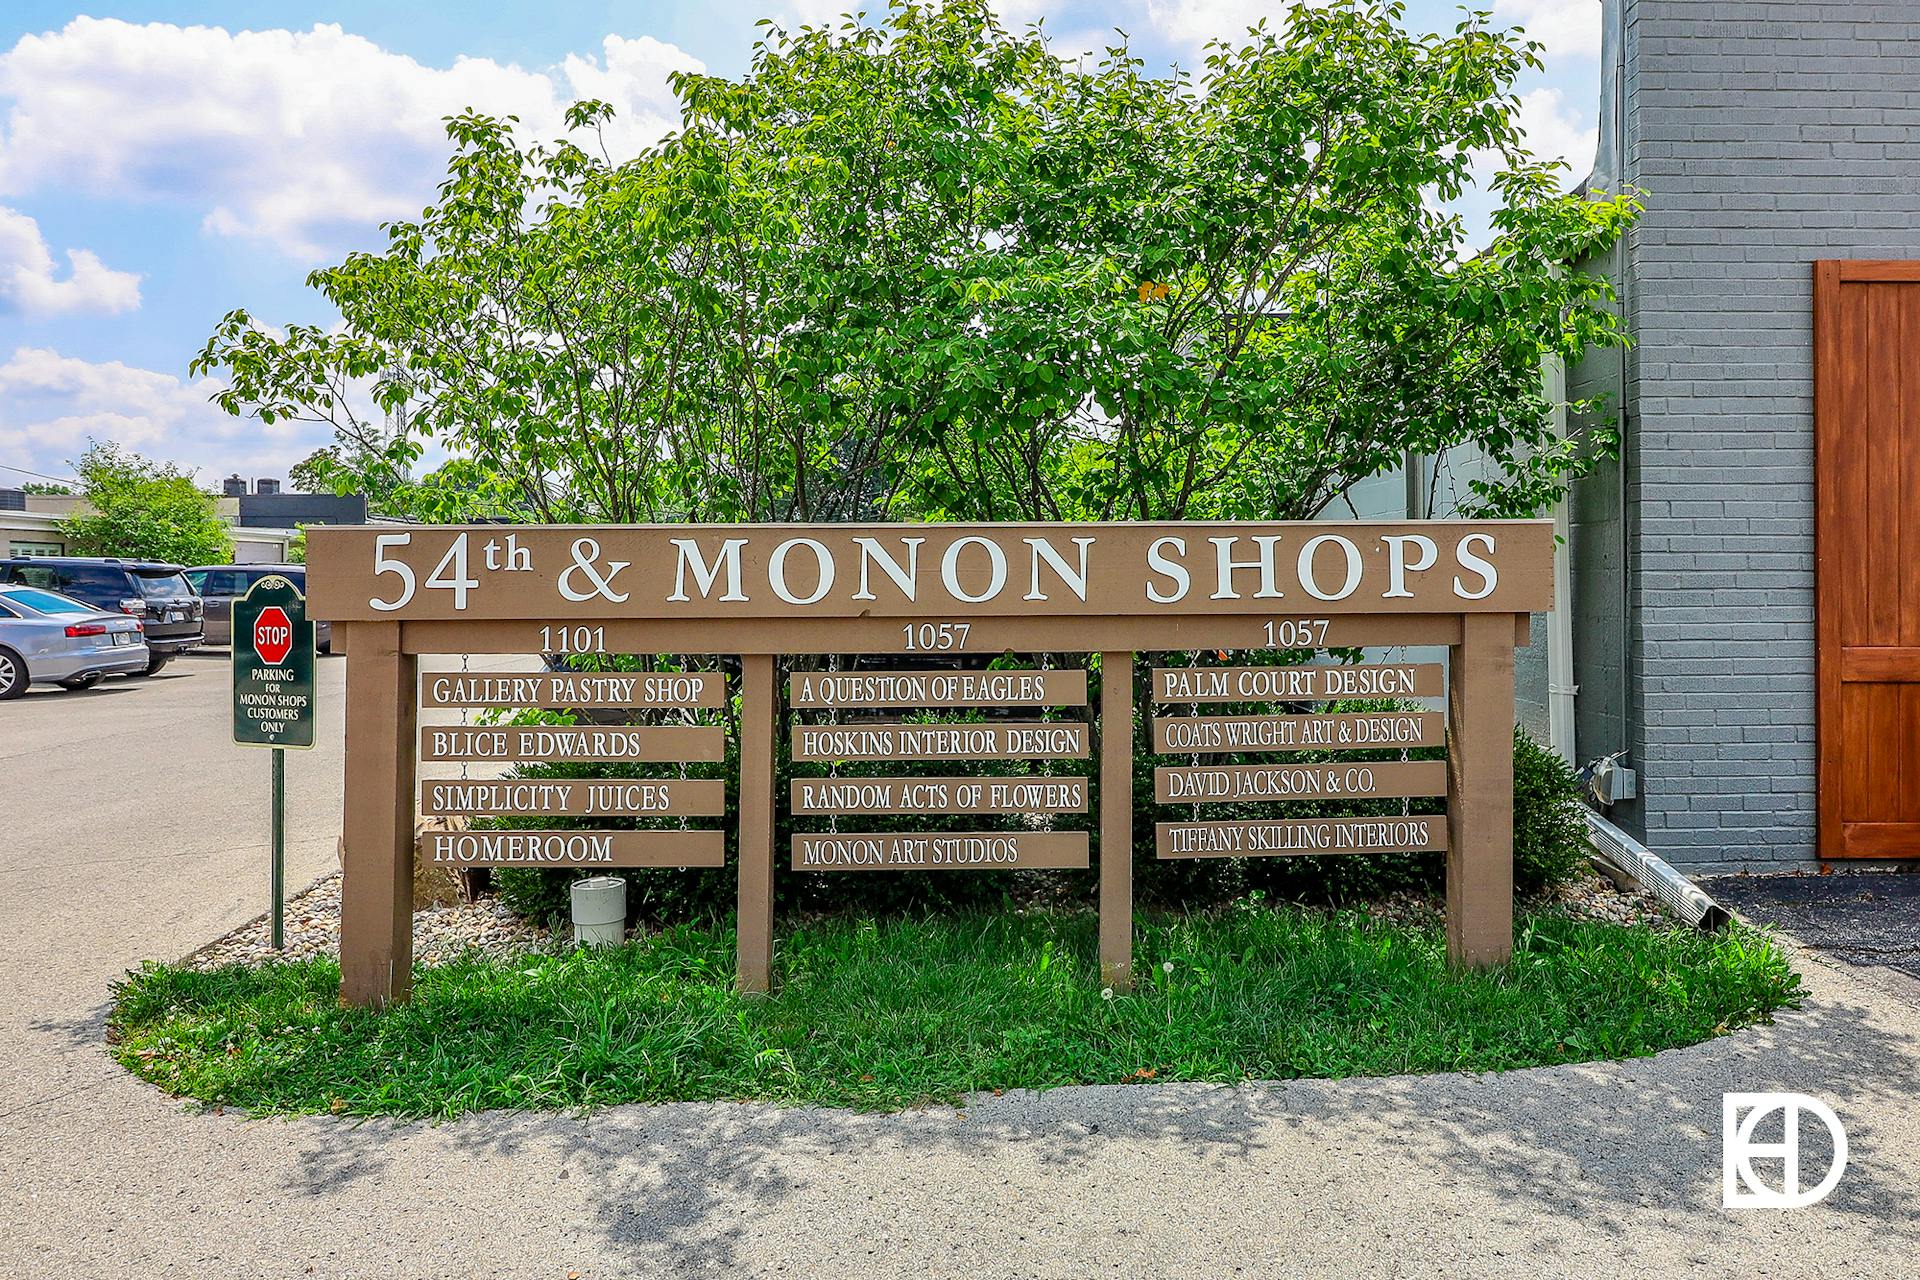 Photo of 54th & Monon Shops signage